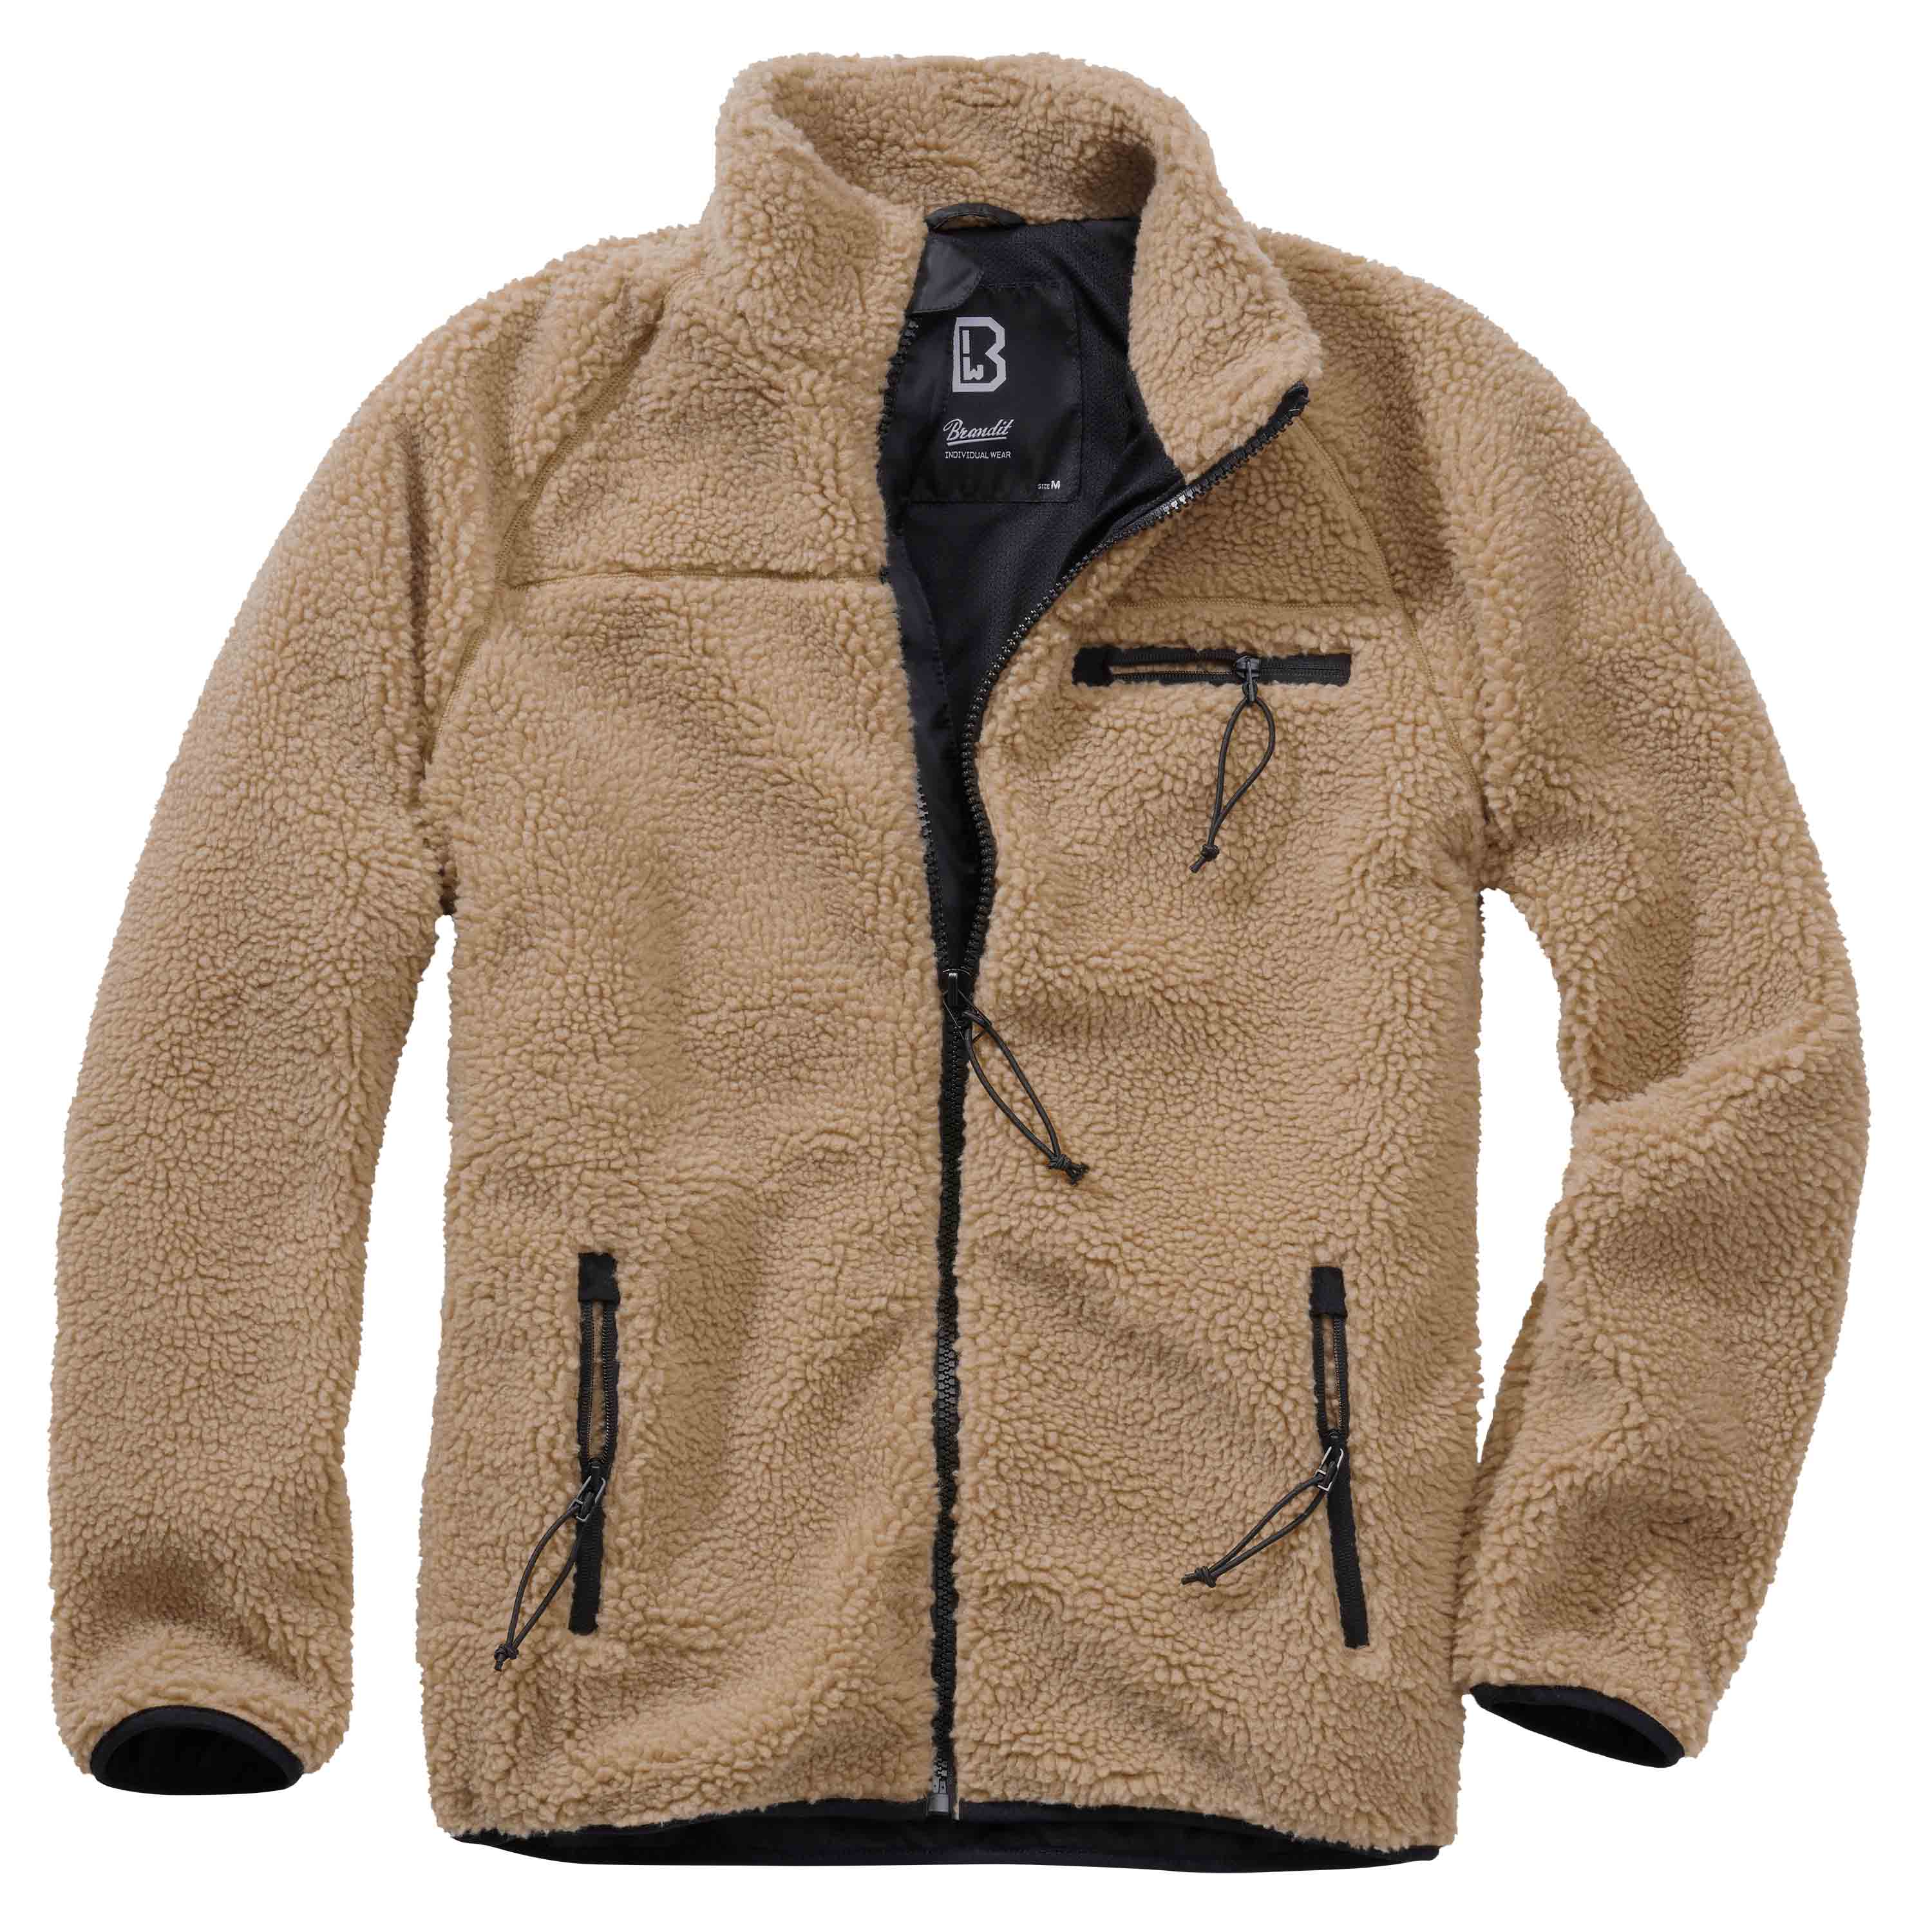 Purchase Jacket by Brandit olive Fleece ASMC Teddy the